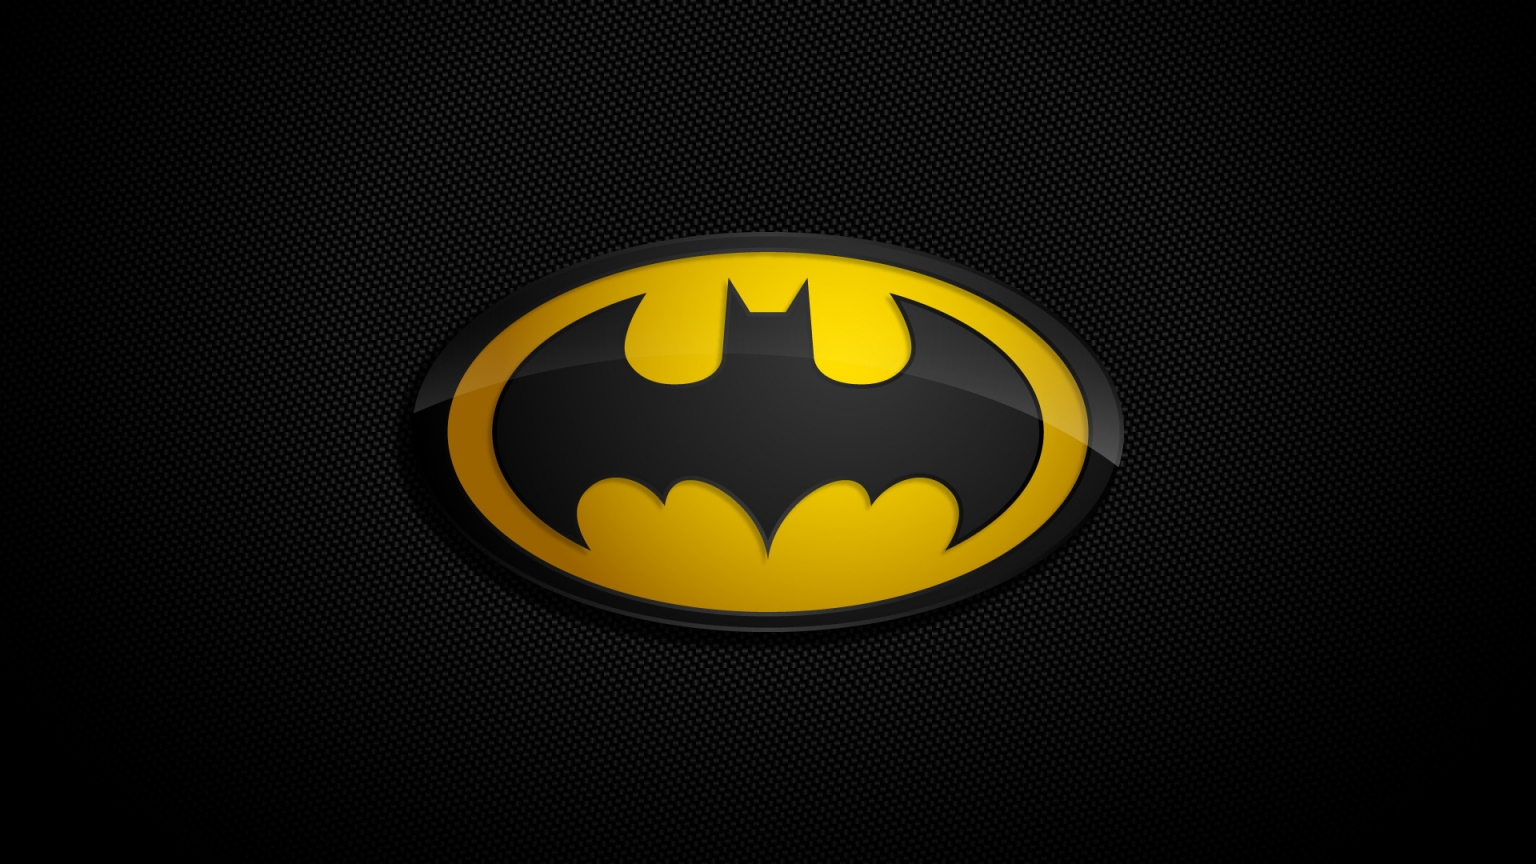 Batman Logo for 1536 x 864 HDTV resolution